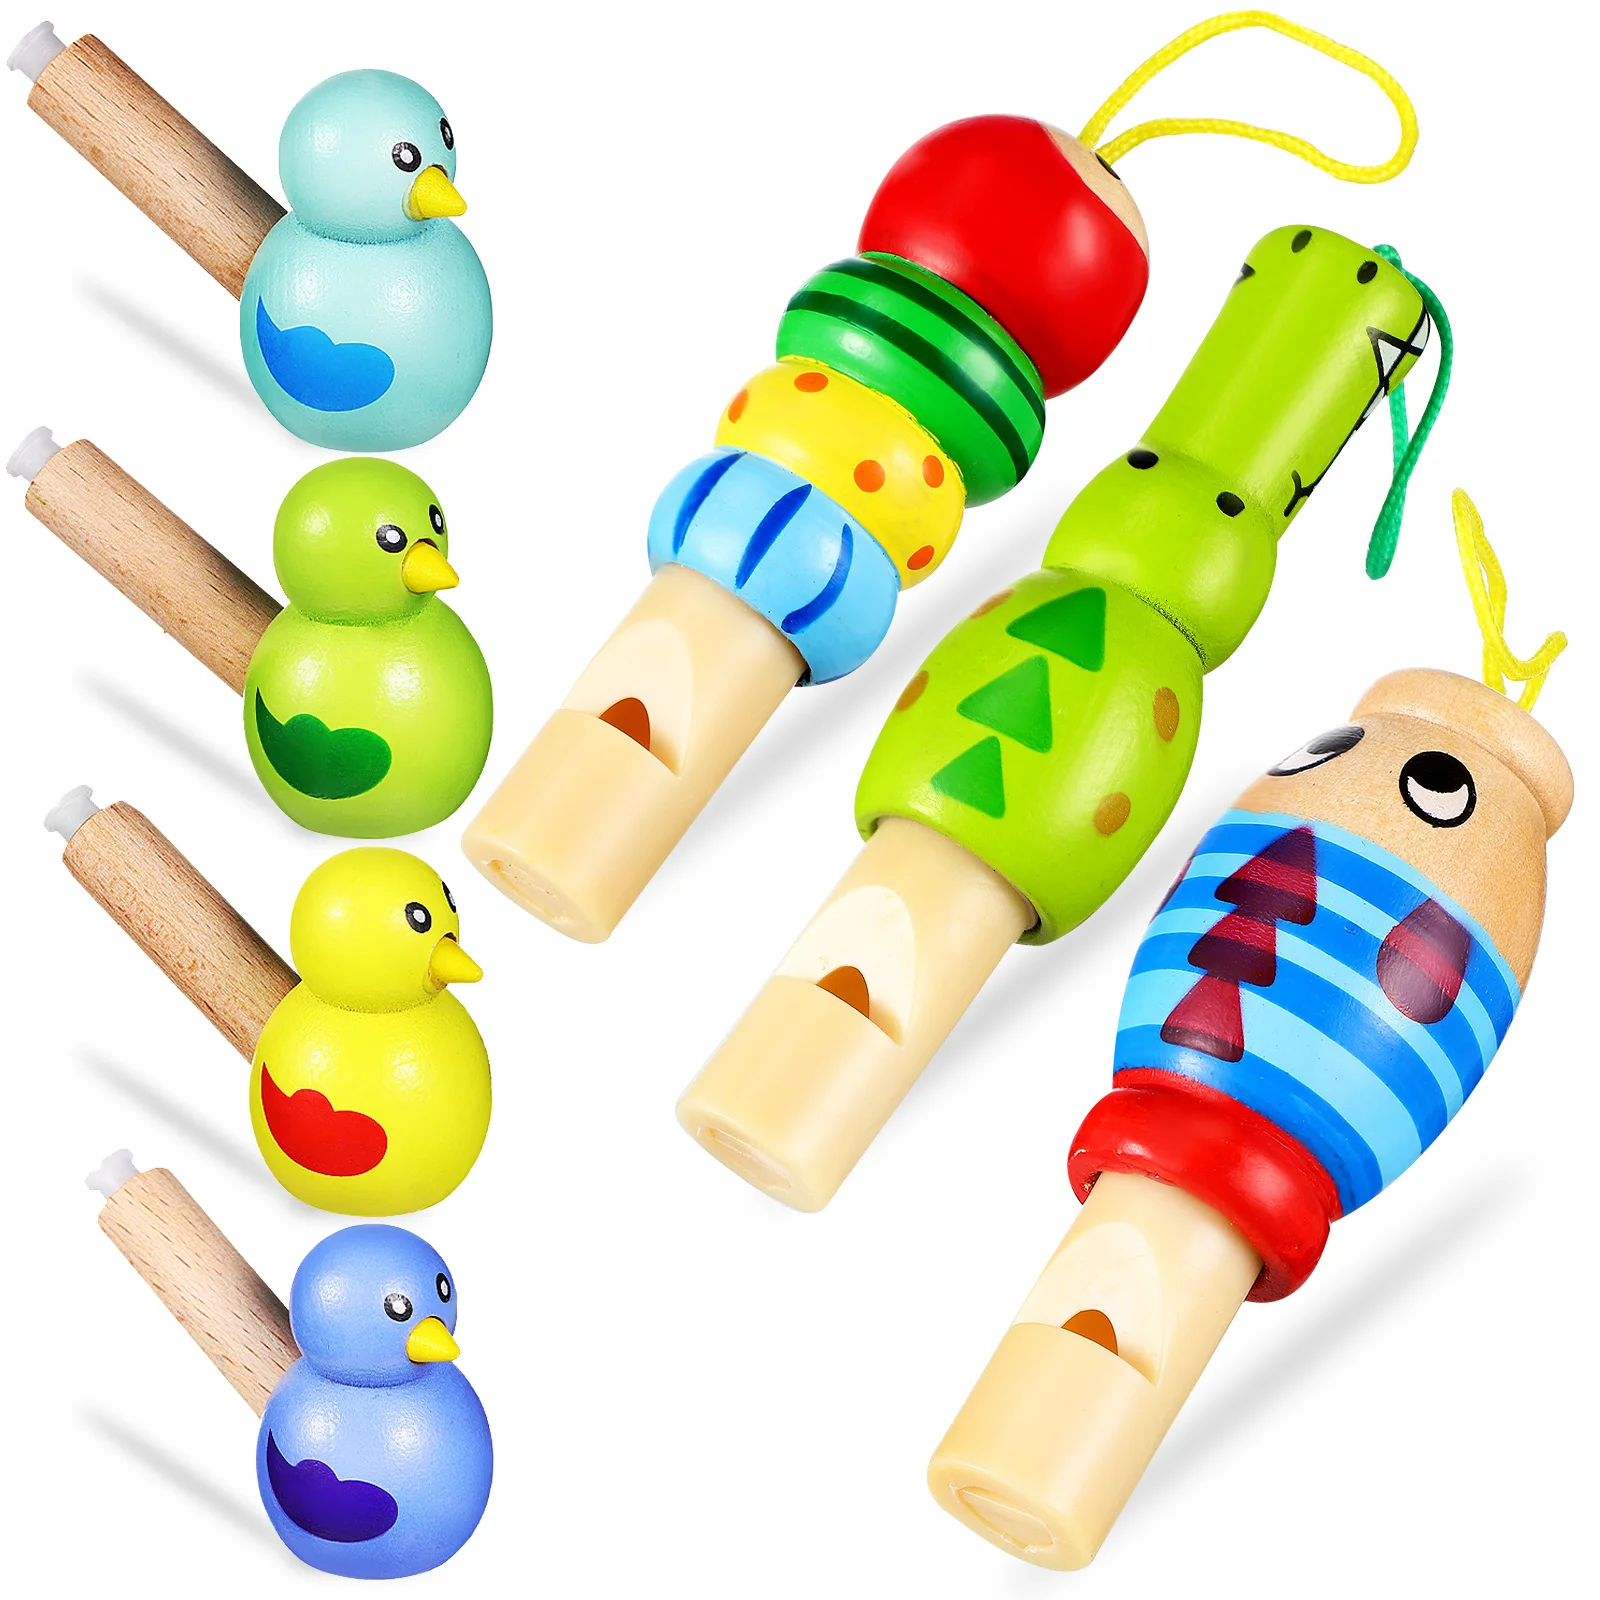 

7 Pcs Animal Whistle Loud Sound Toddler Toy Wooden Toys Babies Kids Educational Whistles Girl